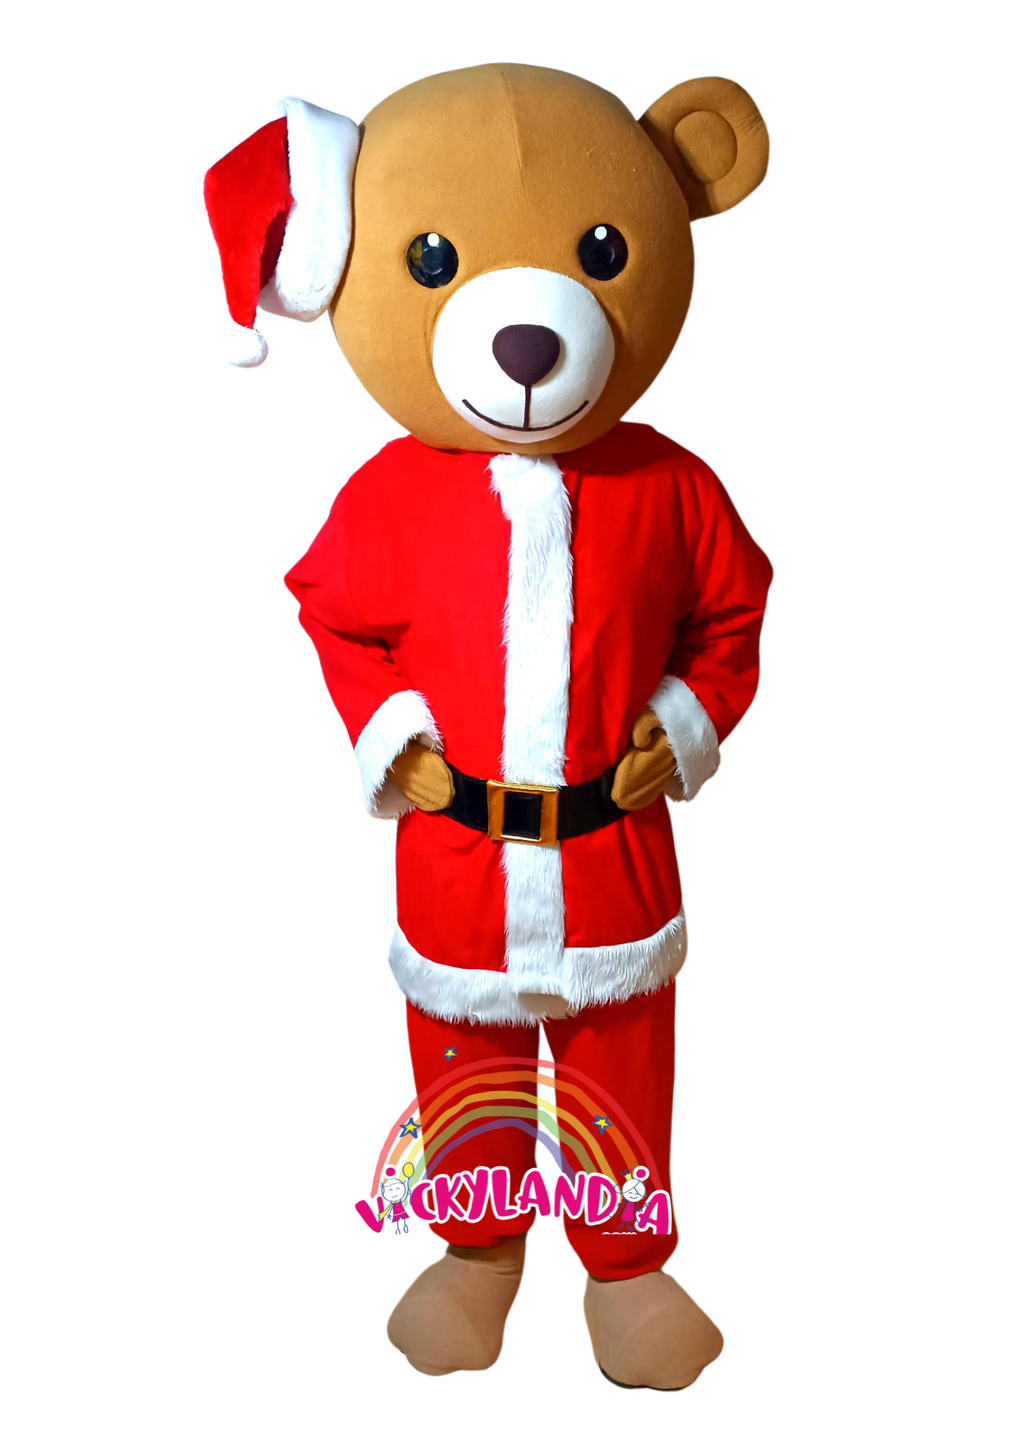 Oso-navidad-christmas-disfraz-cabezon-mascota-publicitaria-vickylandia